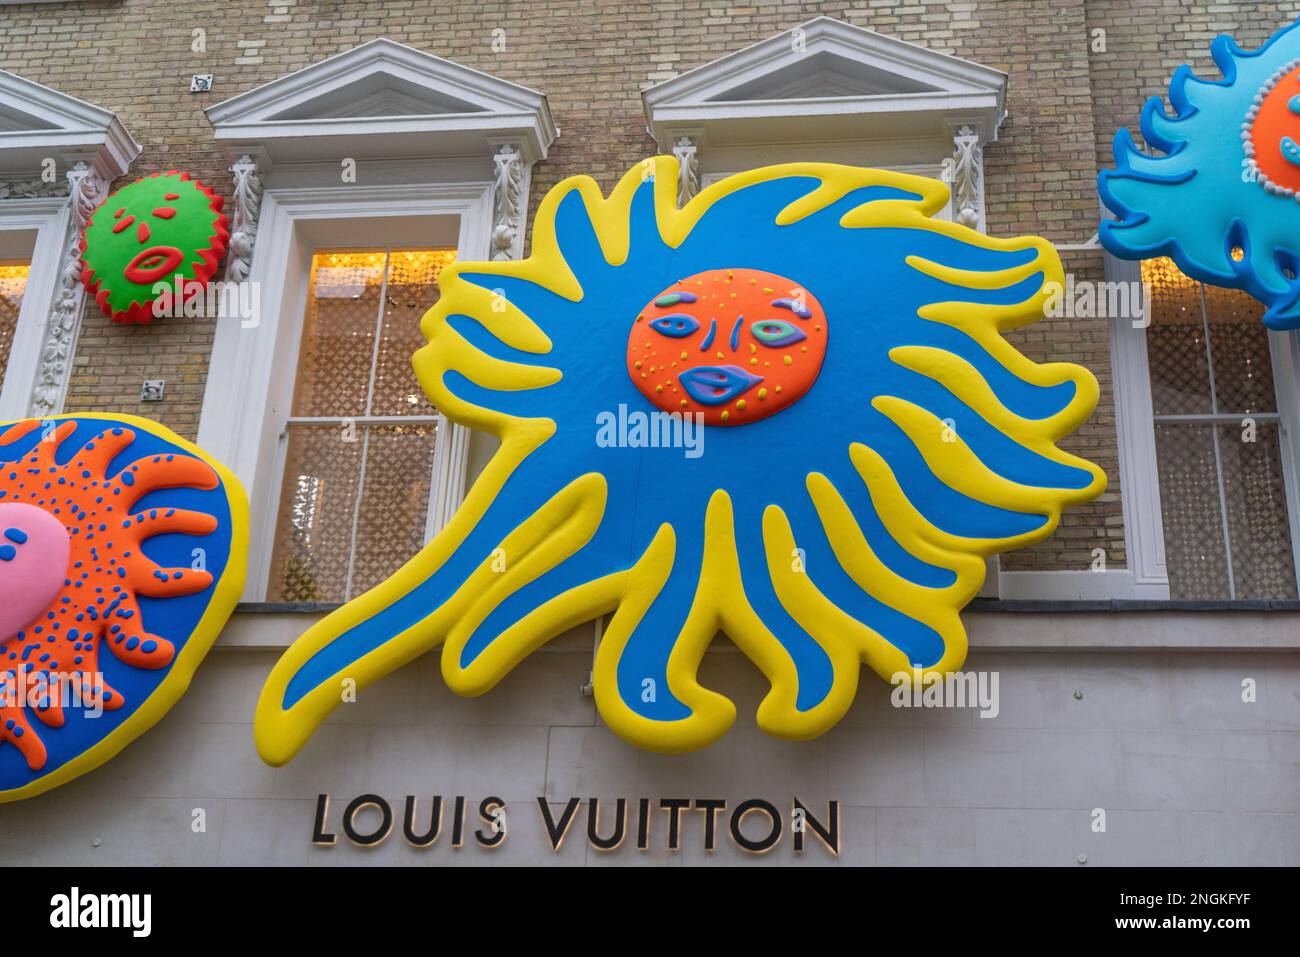 The Yayoi Kusama inspired Louis Vuitton pop-up store in Soho, New